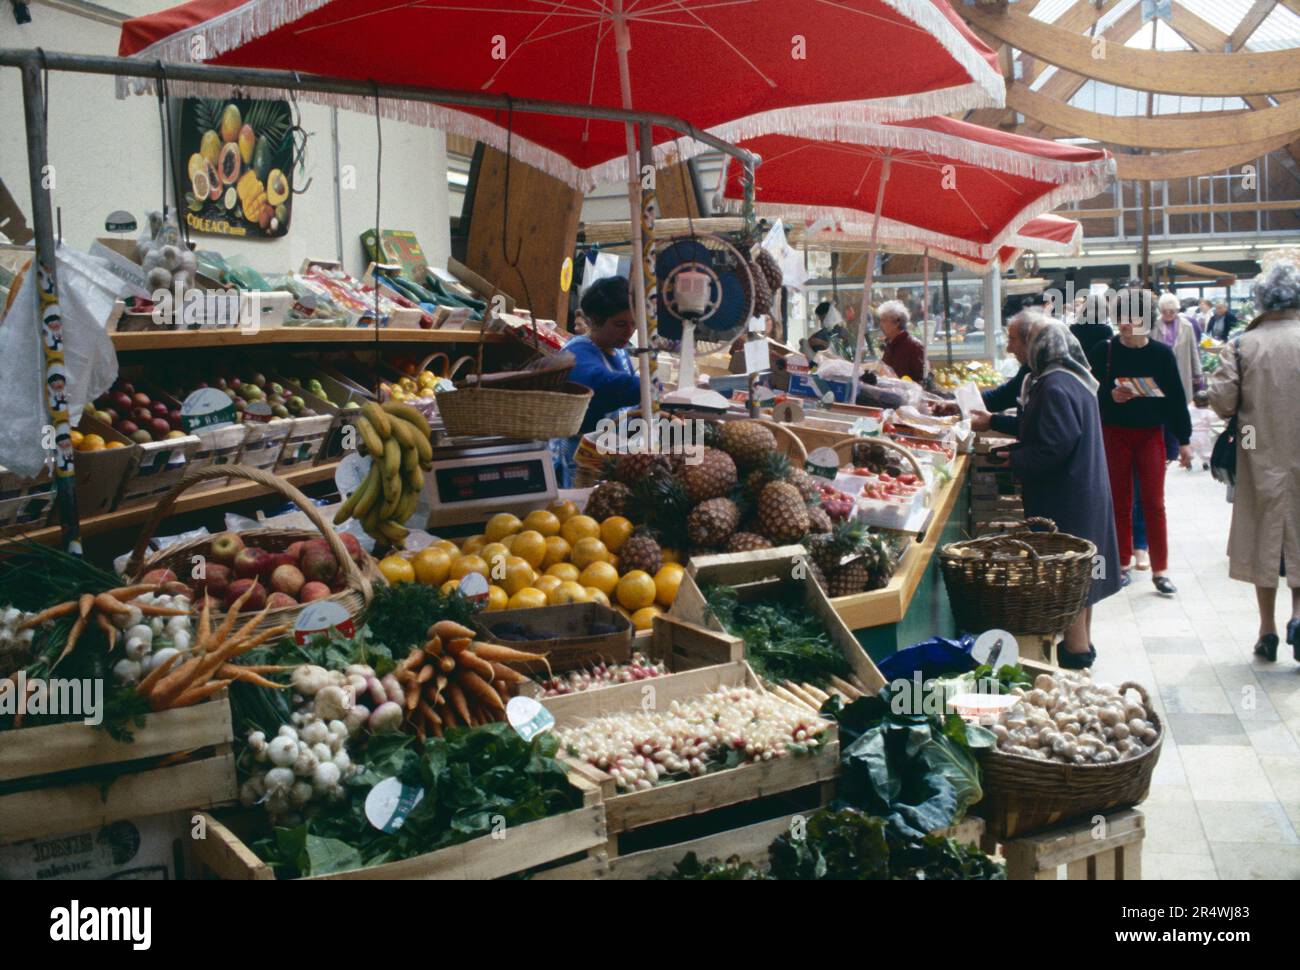 France. Brittany. Quimper. Fruit & vegetables market stall. Stock Photo